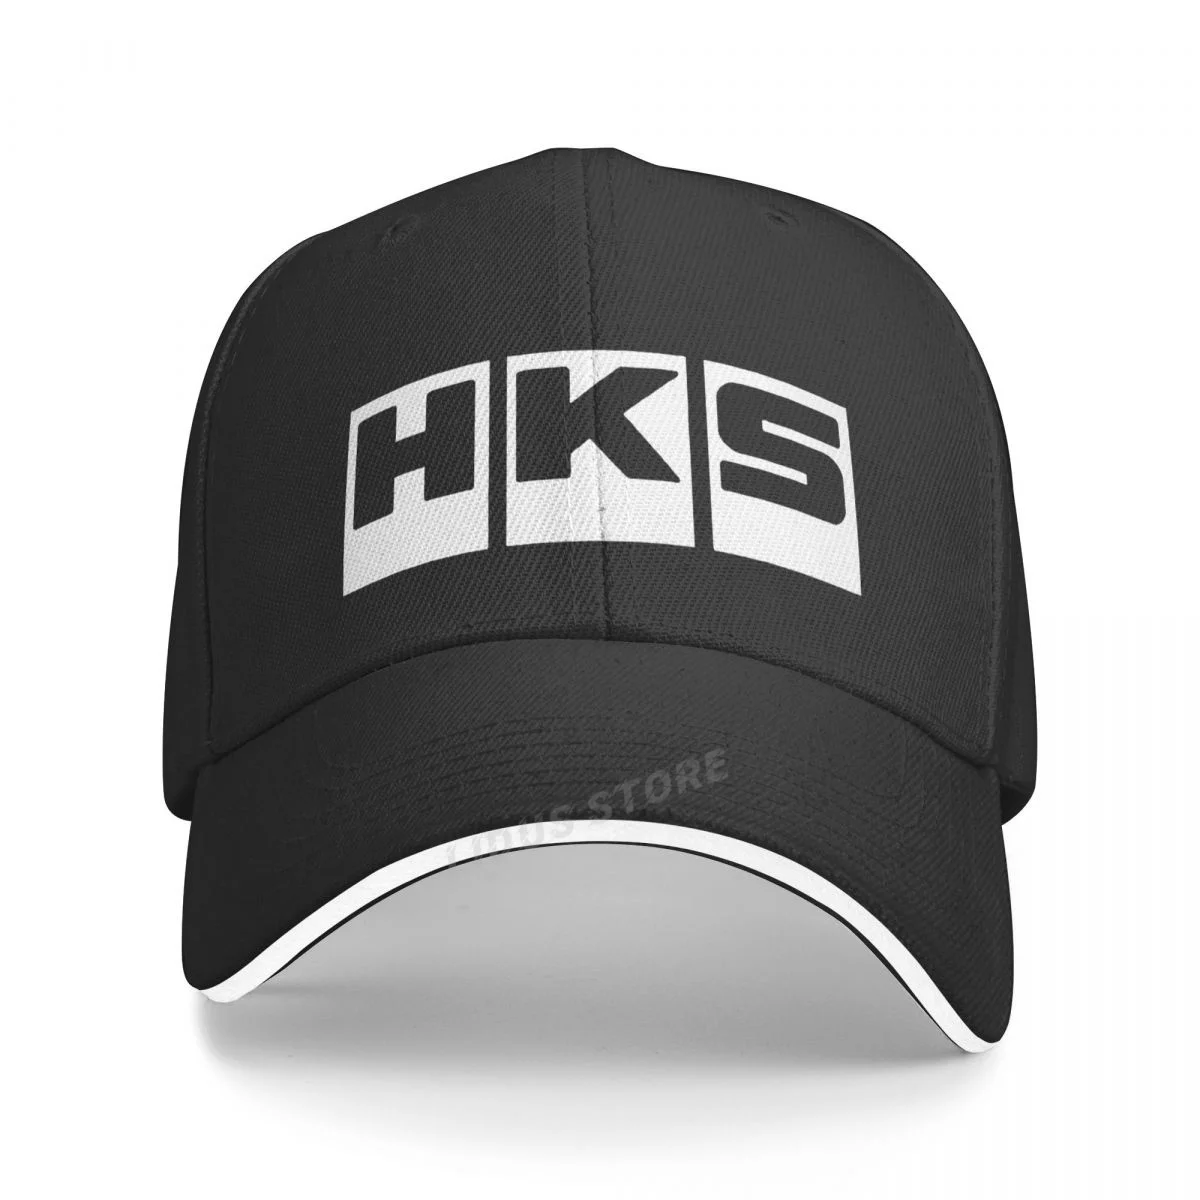 New HKS Logo Baseball Cap Fashion Cool HKS Hat Unisex Outdoor Caps